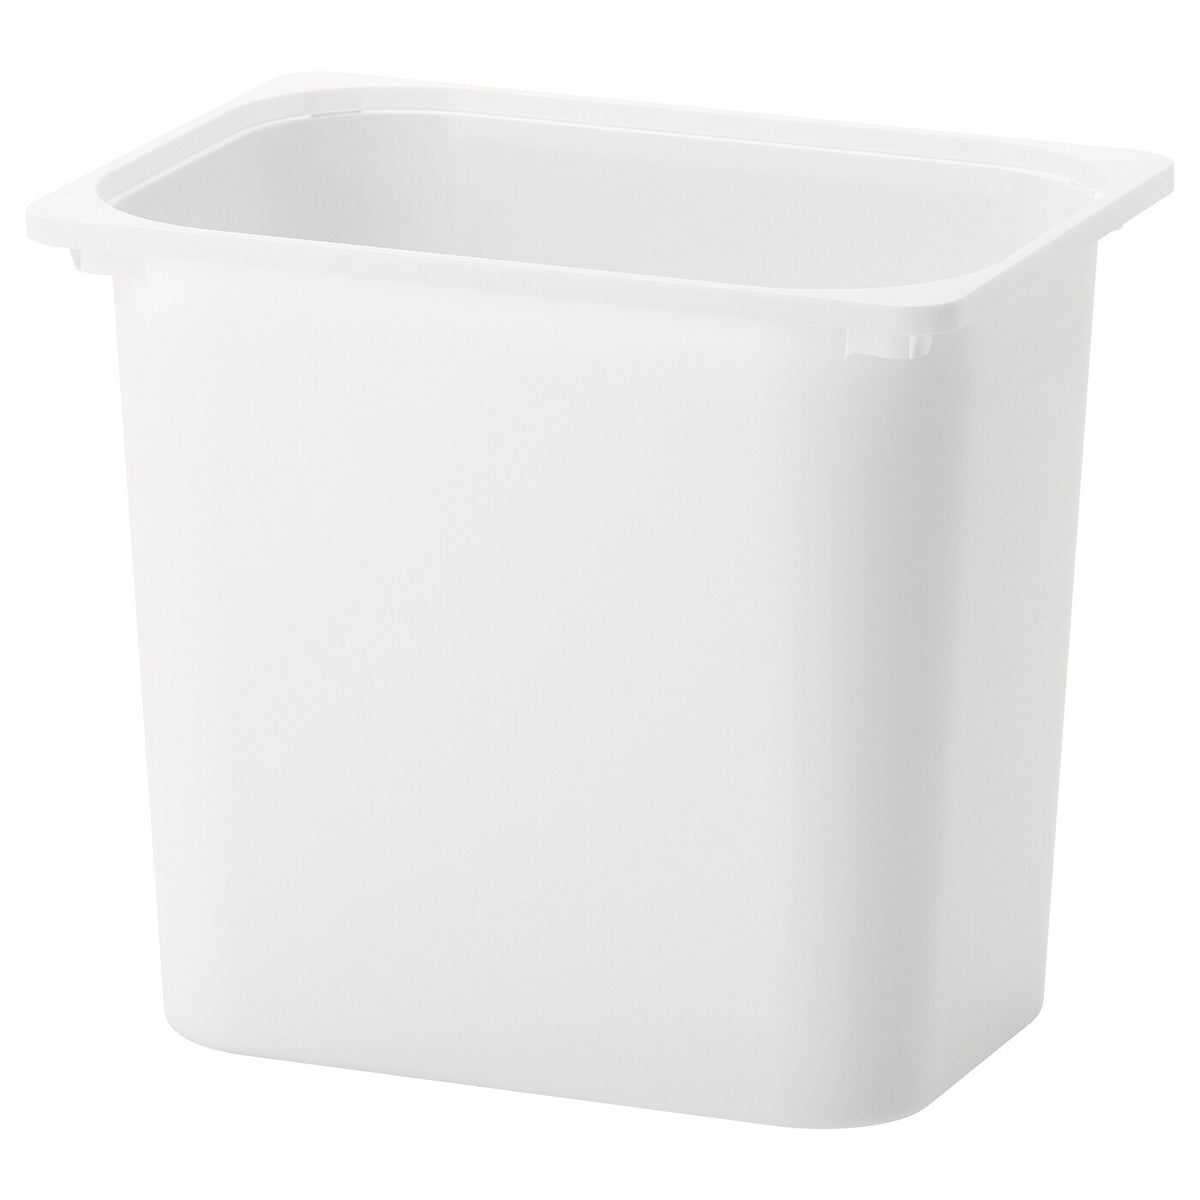 IKEA TROFAST storage box, large white, 42x30x36 cm